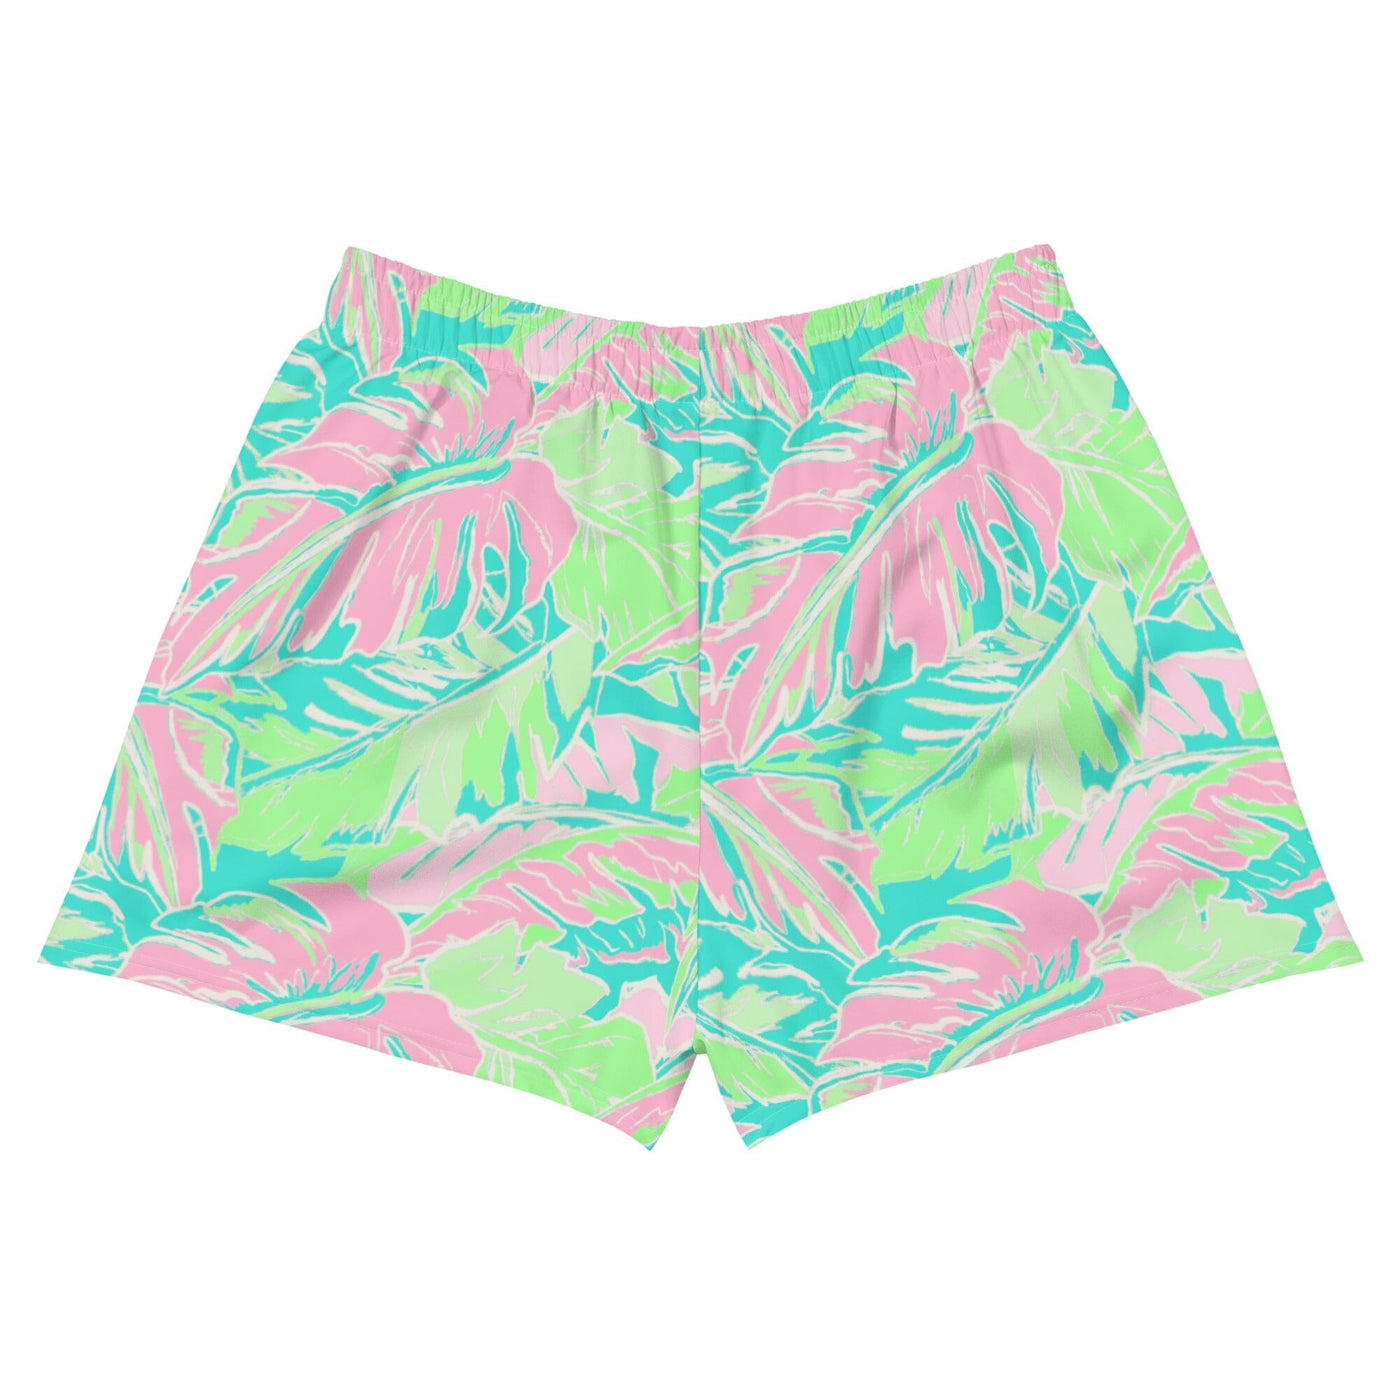 Women’s Florida Keys Light Shorts - Coastal Cool - Swimwear and Beachwear - Recycled fabrics